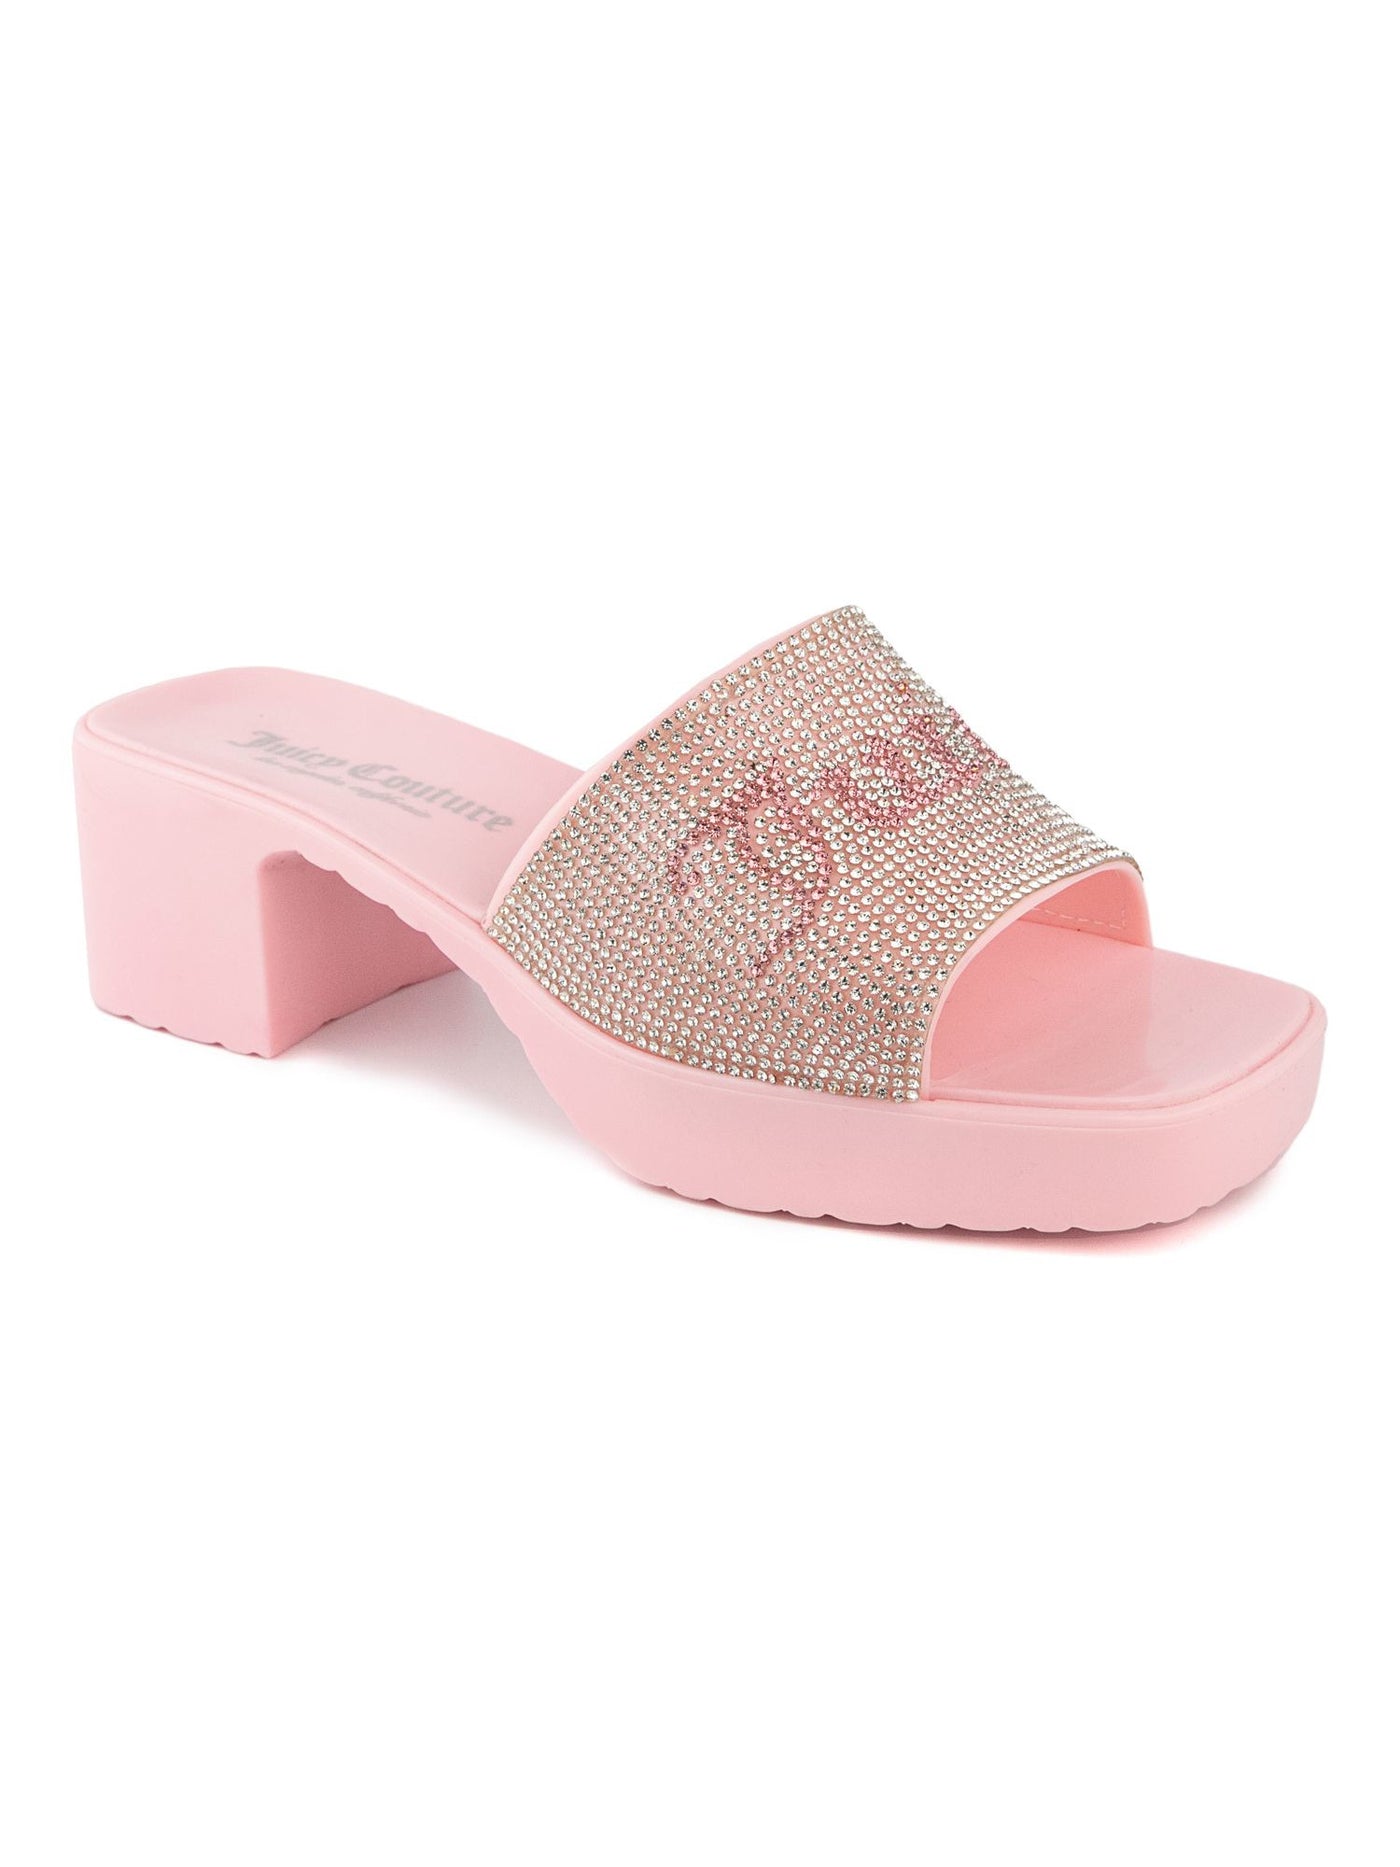 JUICY COUTURE Womens Pink Embellished Harmona Square Toe Block Heel Slip On Dress Heeled Sandal 9